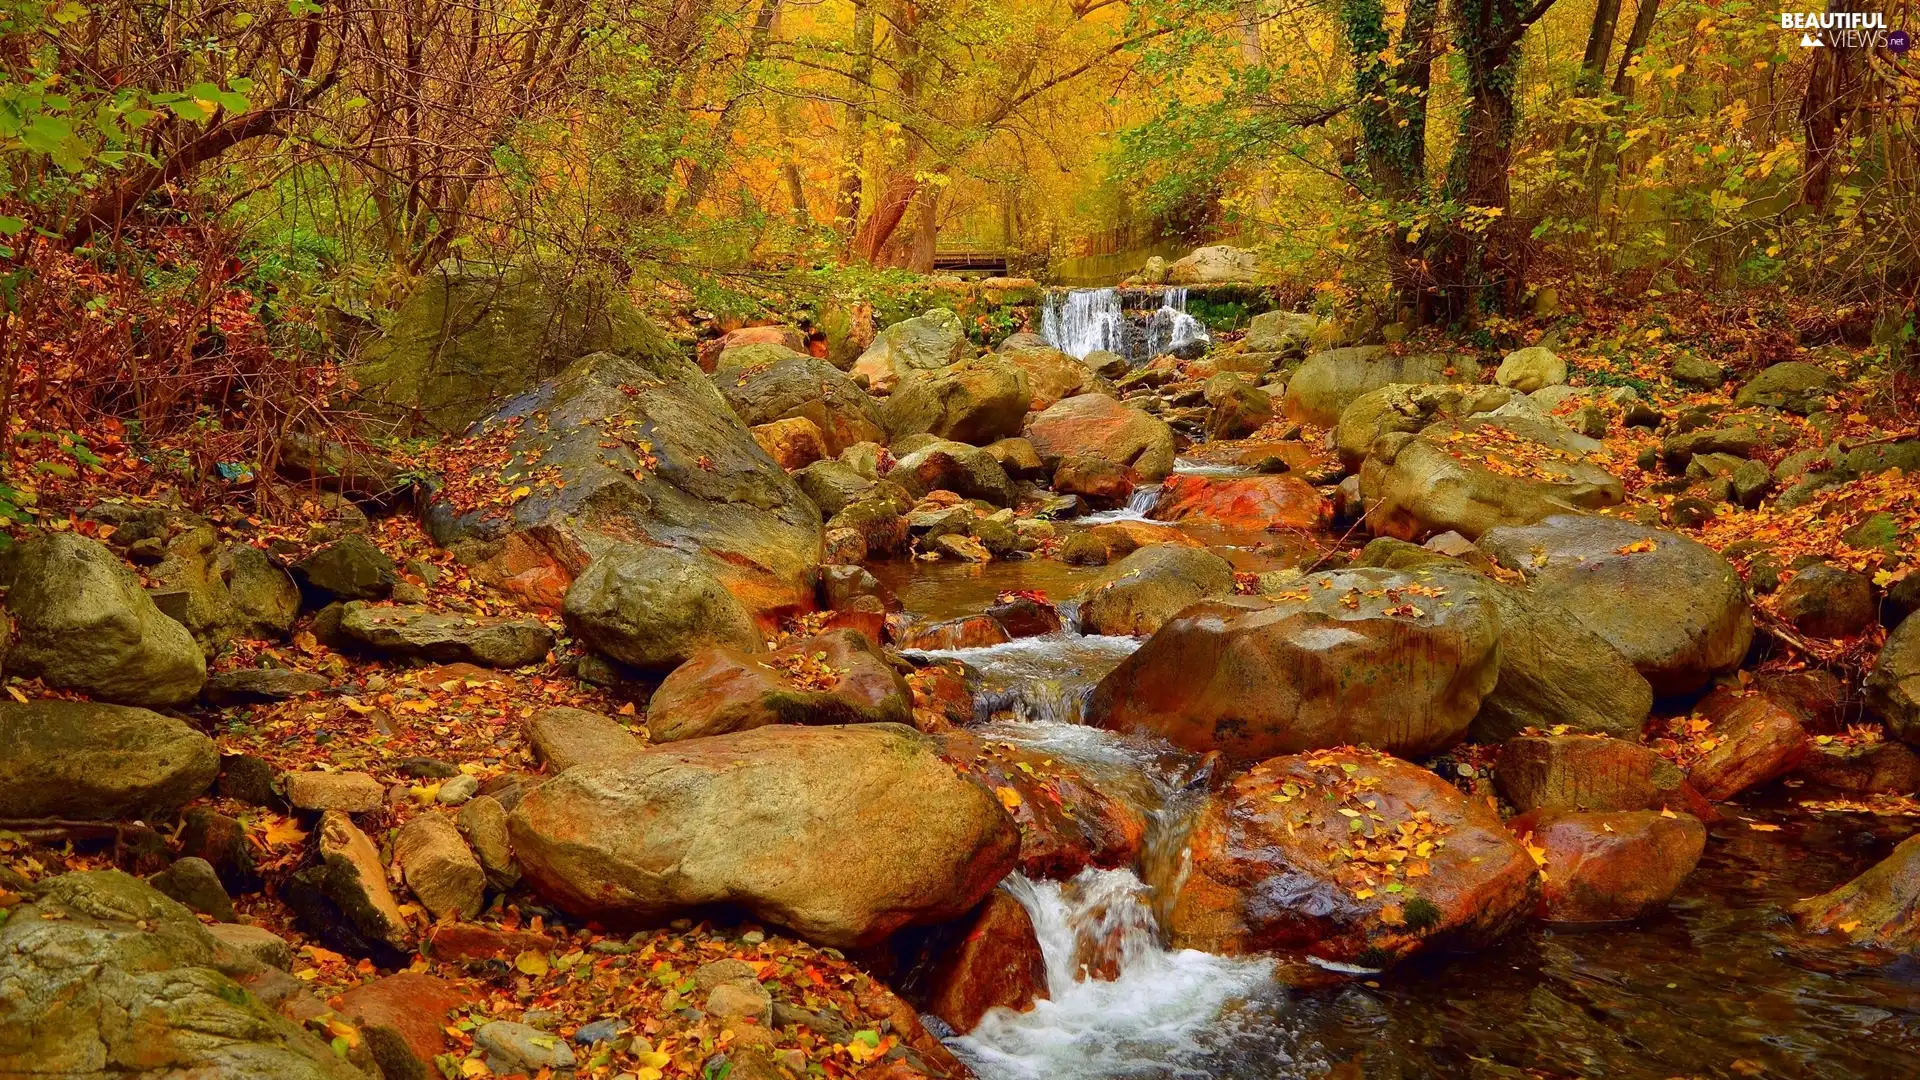 Stones, forest, autumn, Leaf, rocks, River